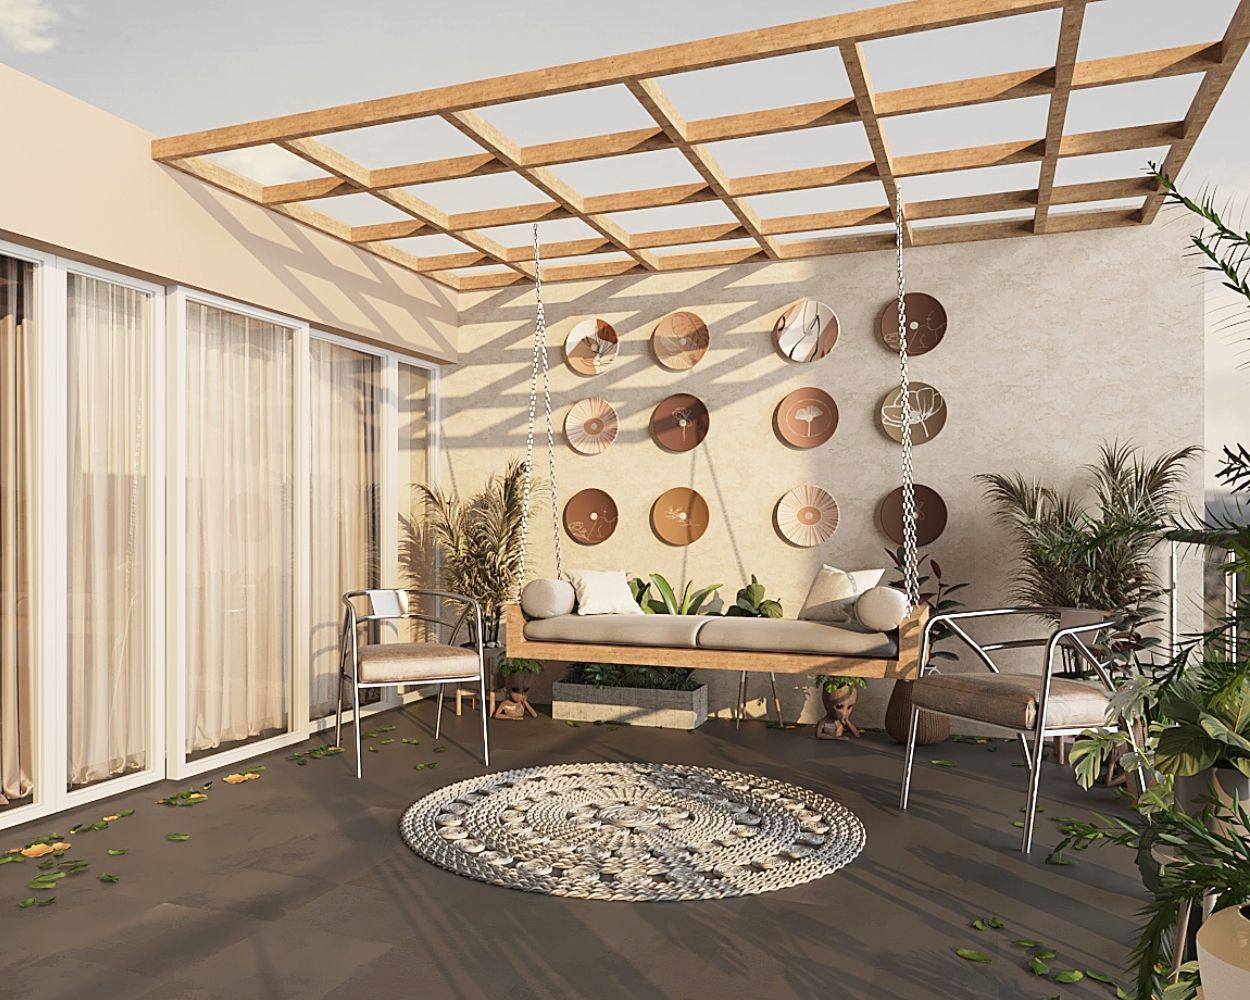 Tropical Balcony Design With Wooden Pergola